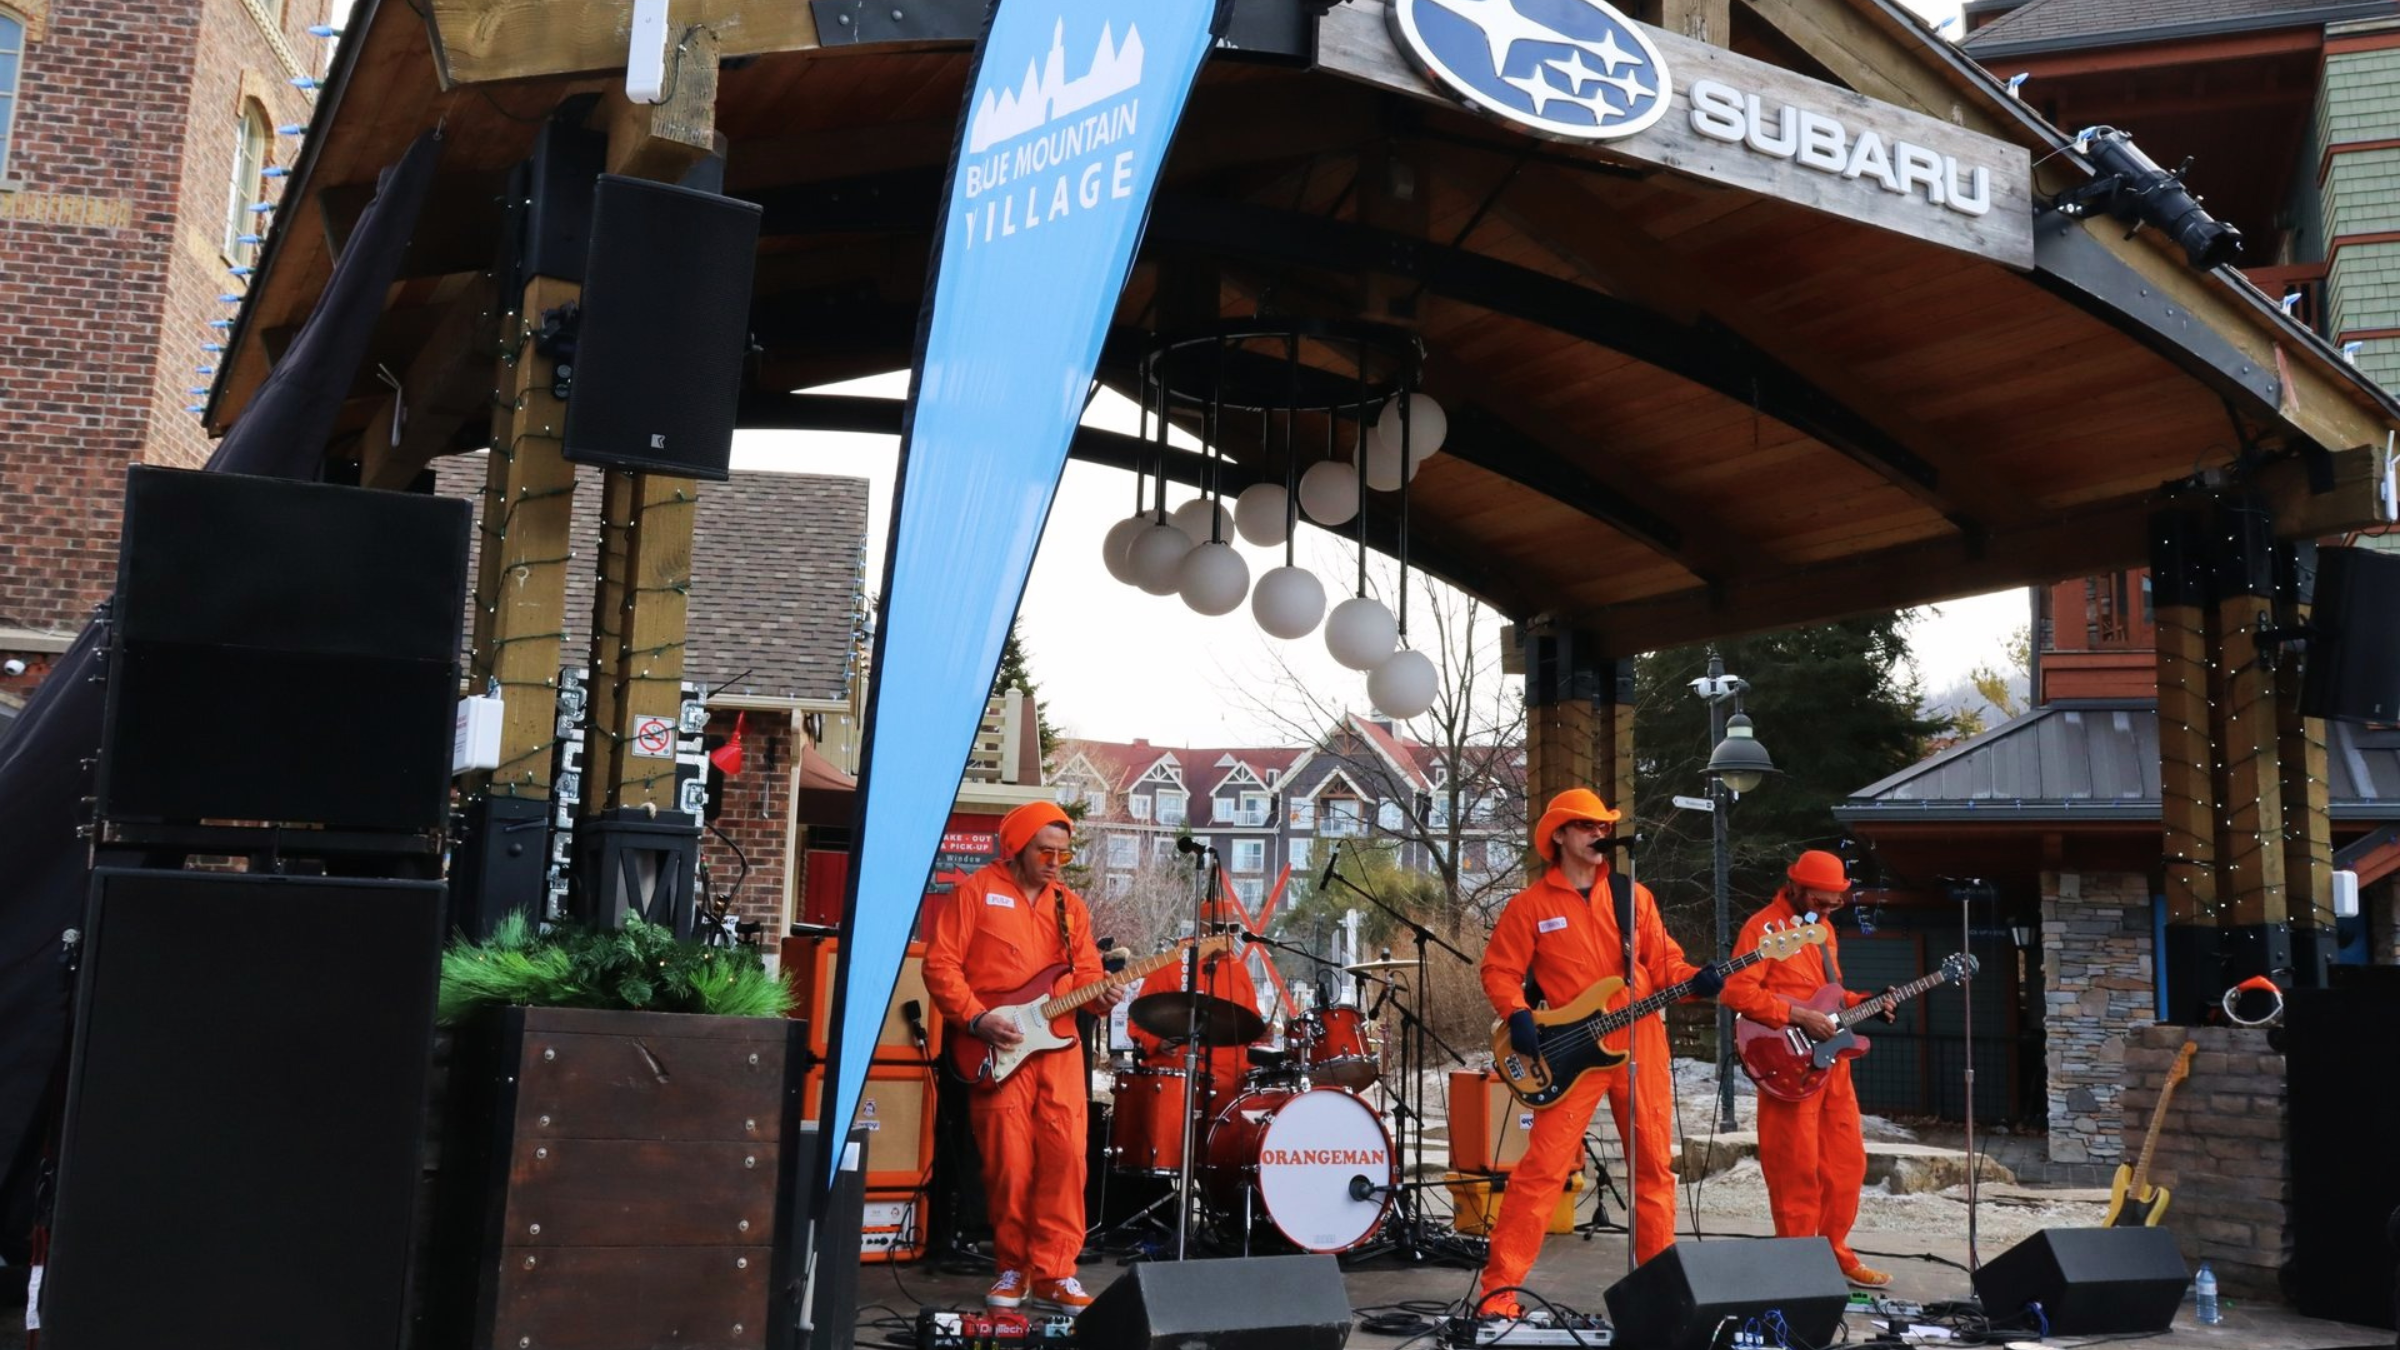 Orangeman Live Music at March Break in the village of Blue Mountain